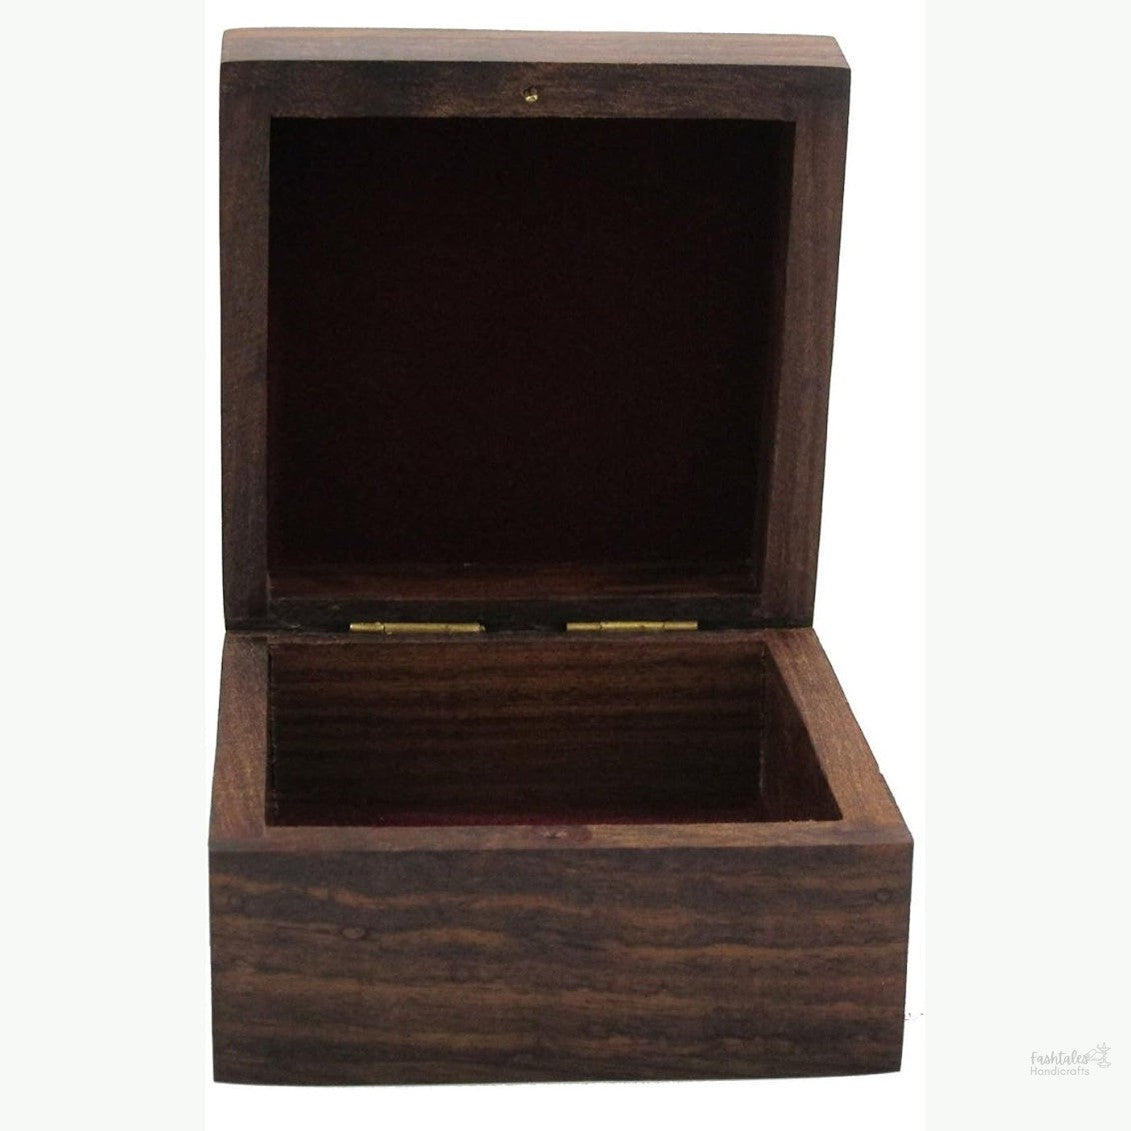 Fashtales Handicrafts Wooden Jewelry Box for Women - Precious Jewels Organizer (4x4 inch)